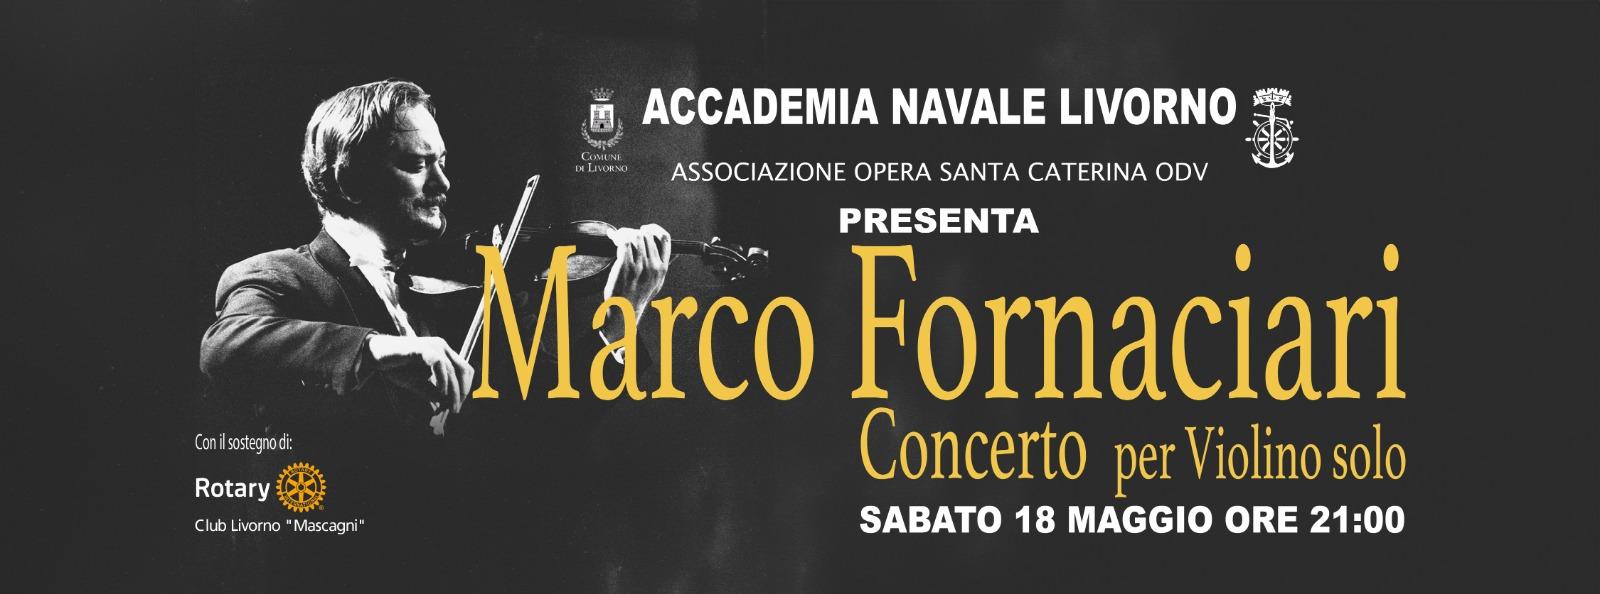 Banner evento Marco Fornaciari